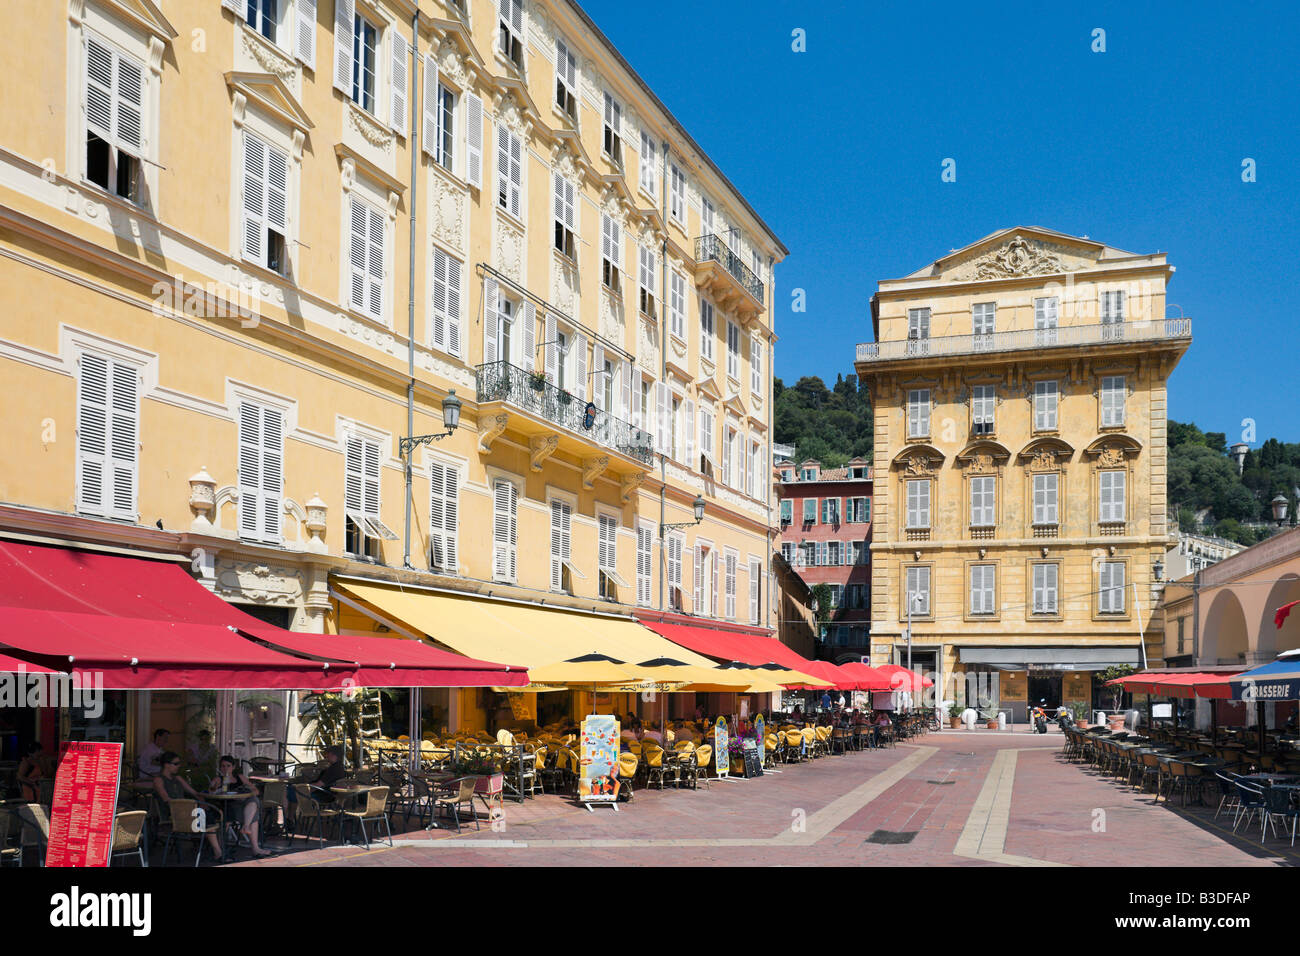 Ristoranti dal Marche aux Fleurs, Cours Saleya nella città vecchia (Vieux Nice), Nizza Cote d'Azur, Costa Azzurra, Francia Foto Stock